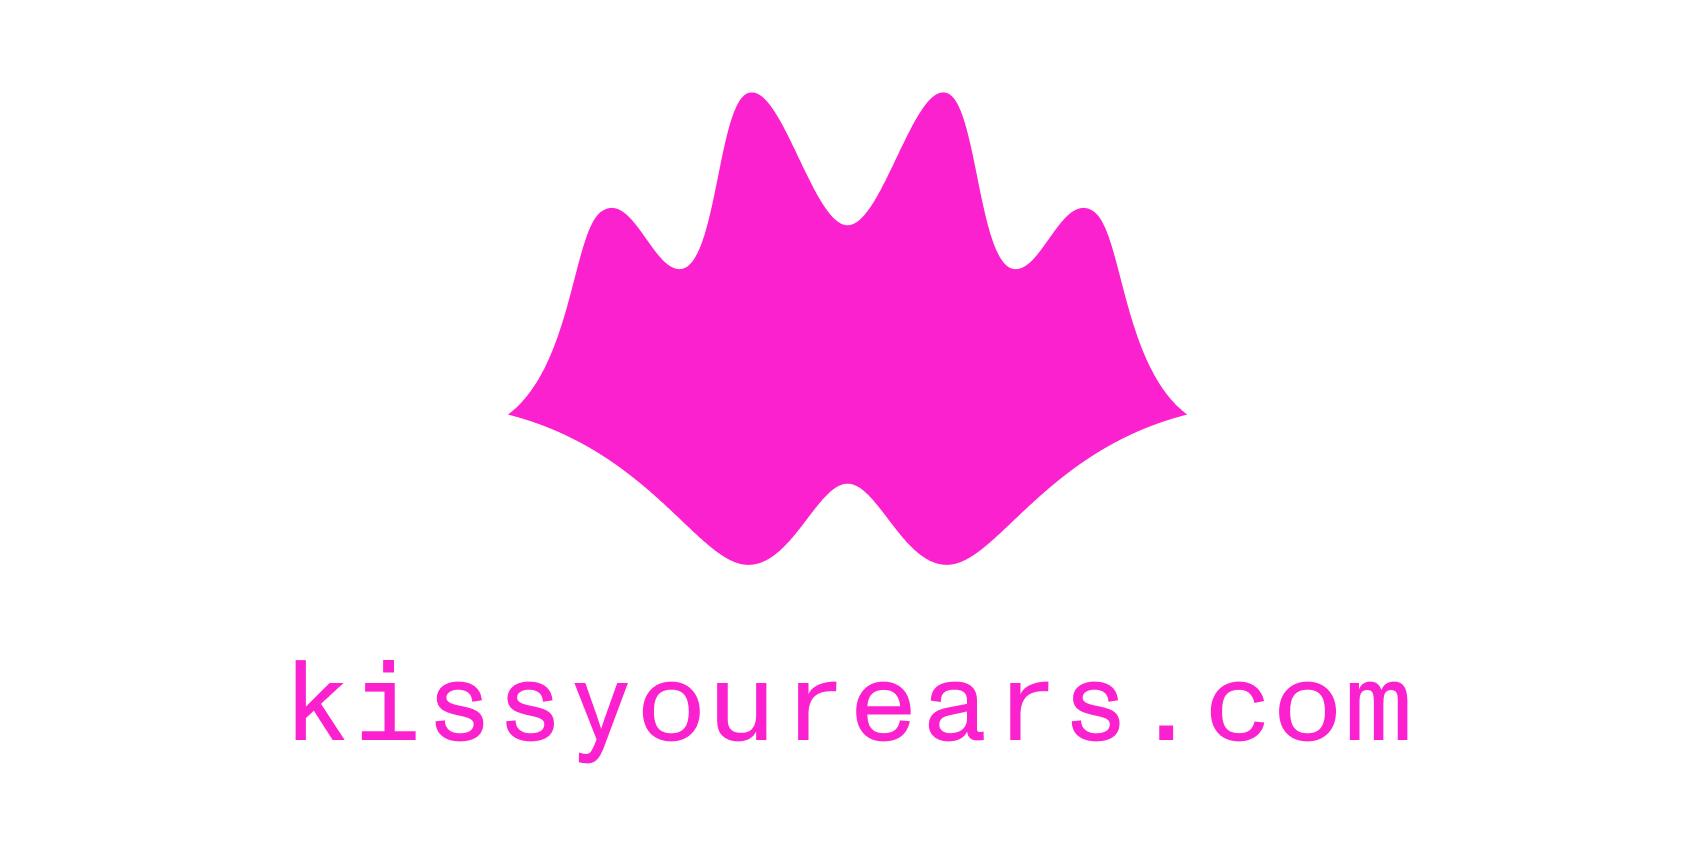 www.kissyourears.com